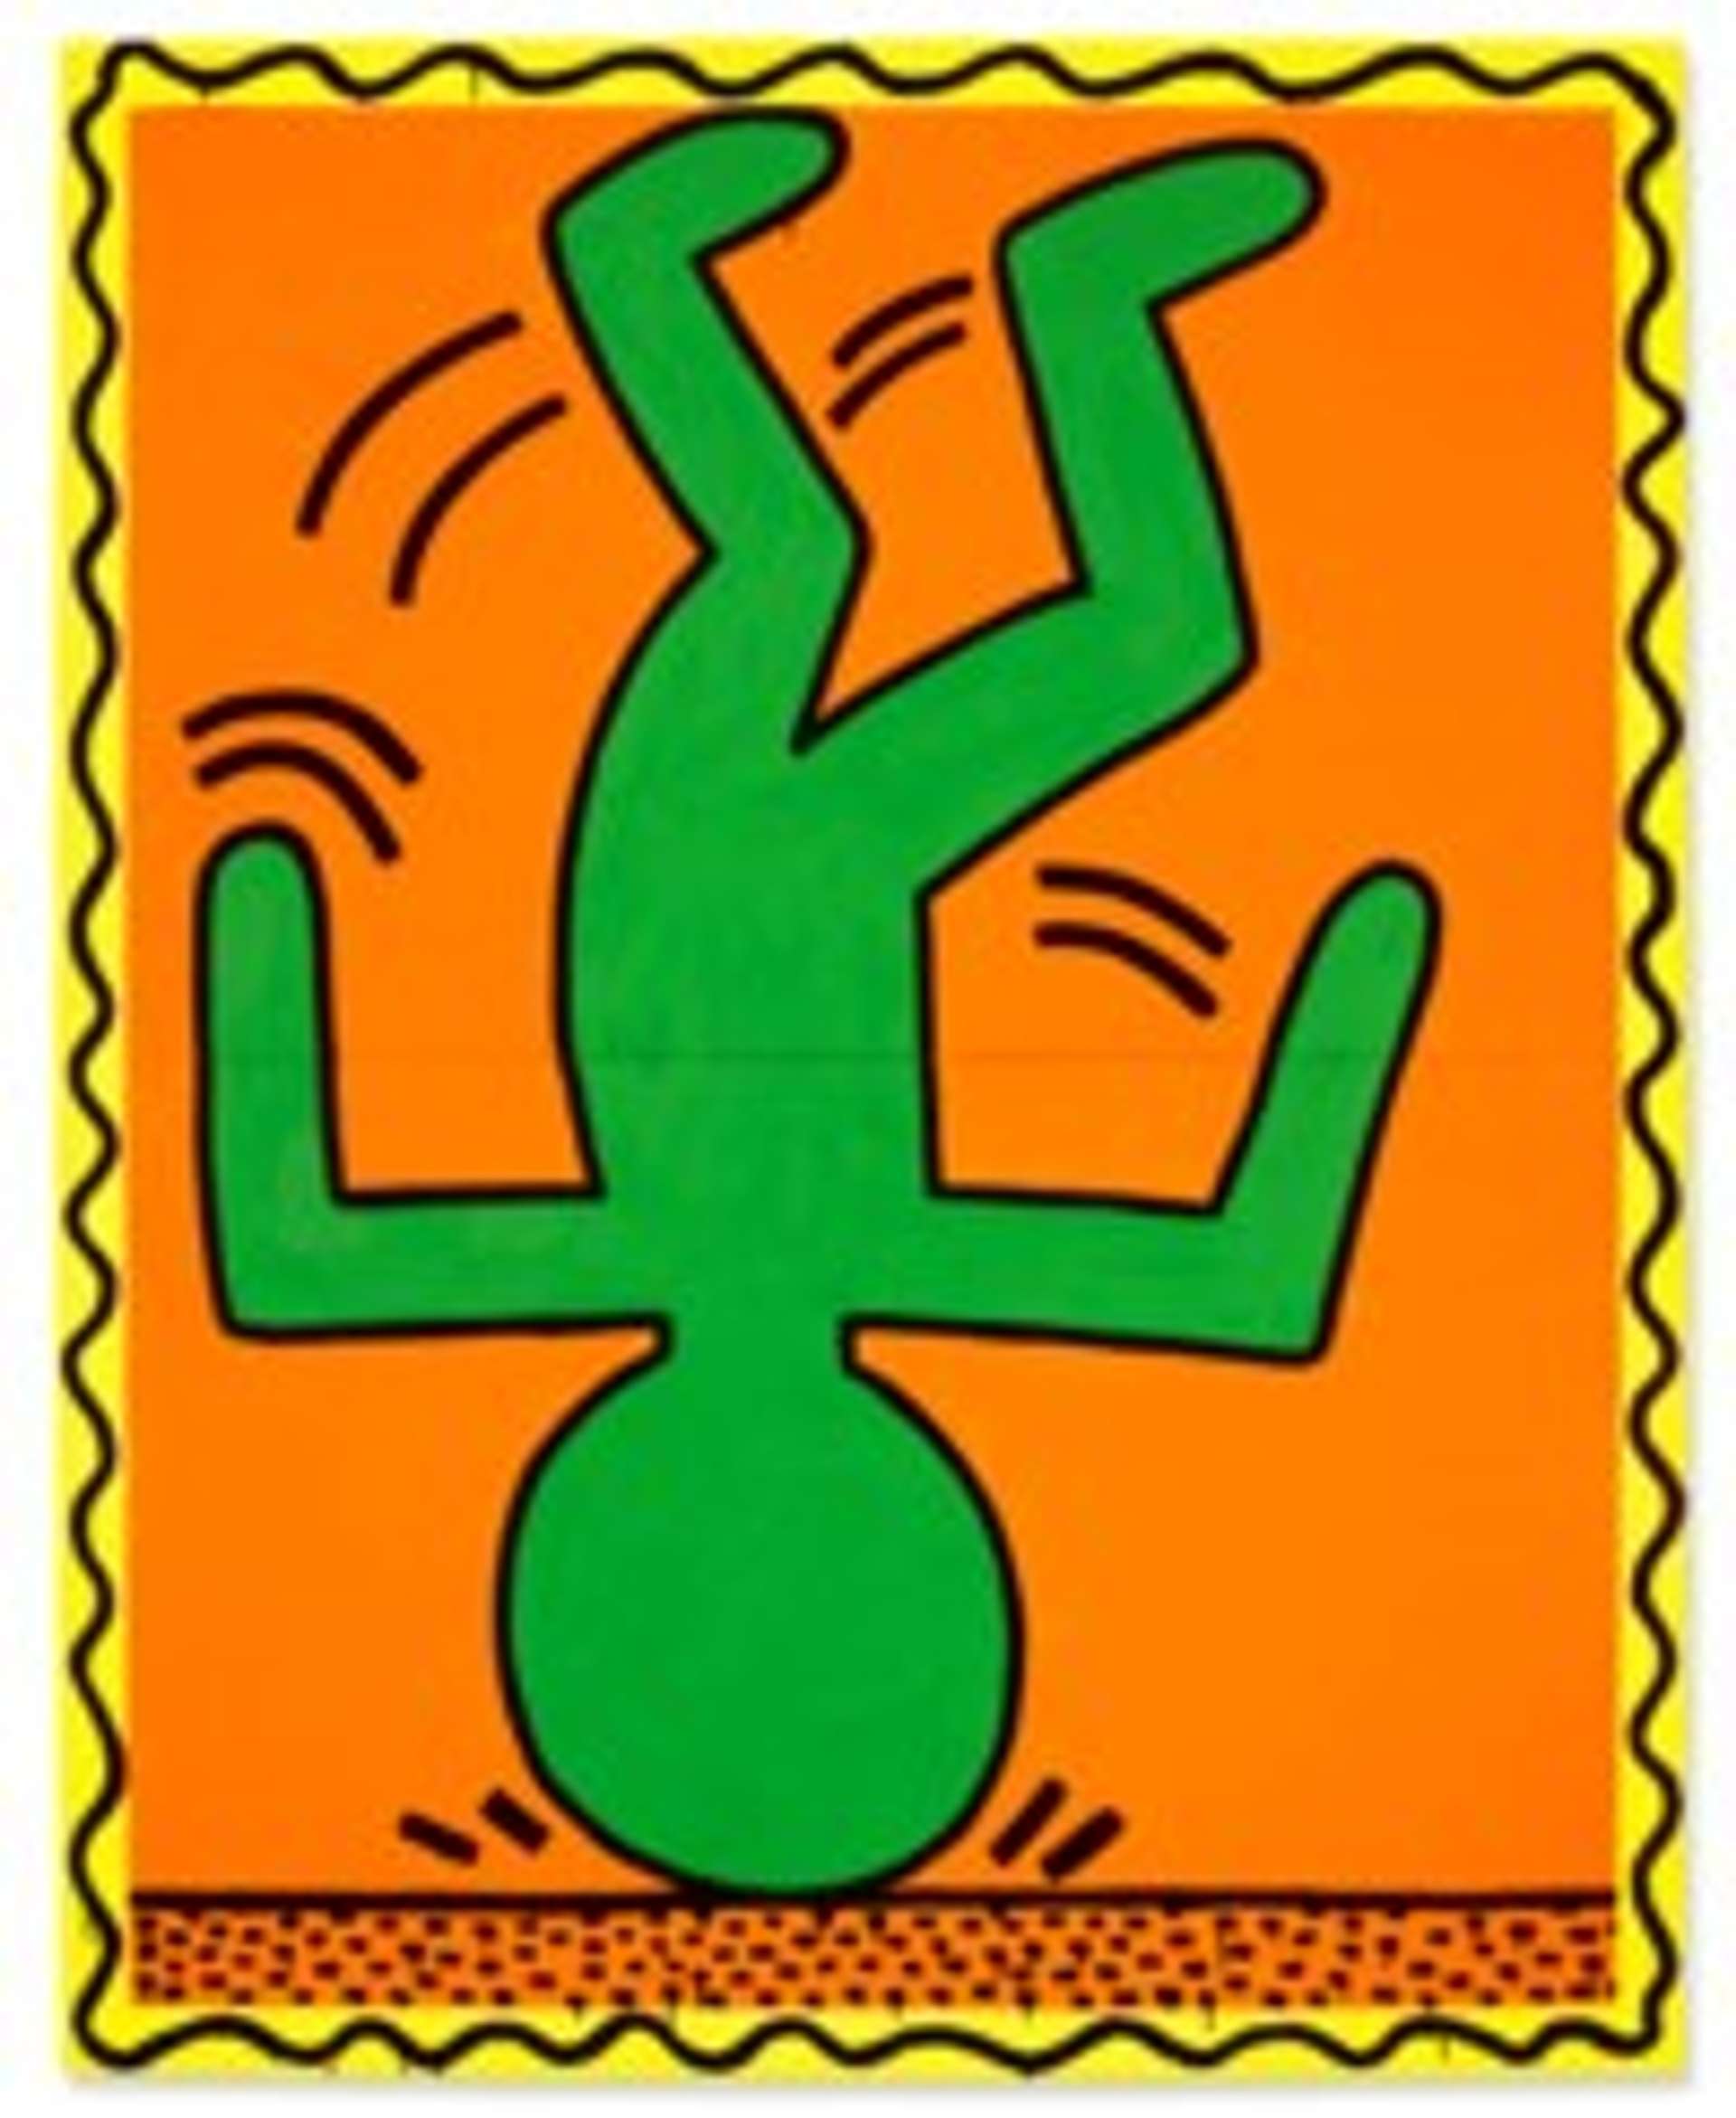 Untitled, 1982 by Keith Haring - MyArtBroker